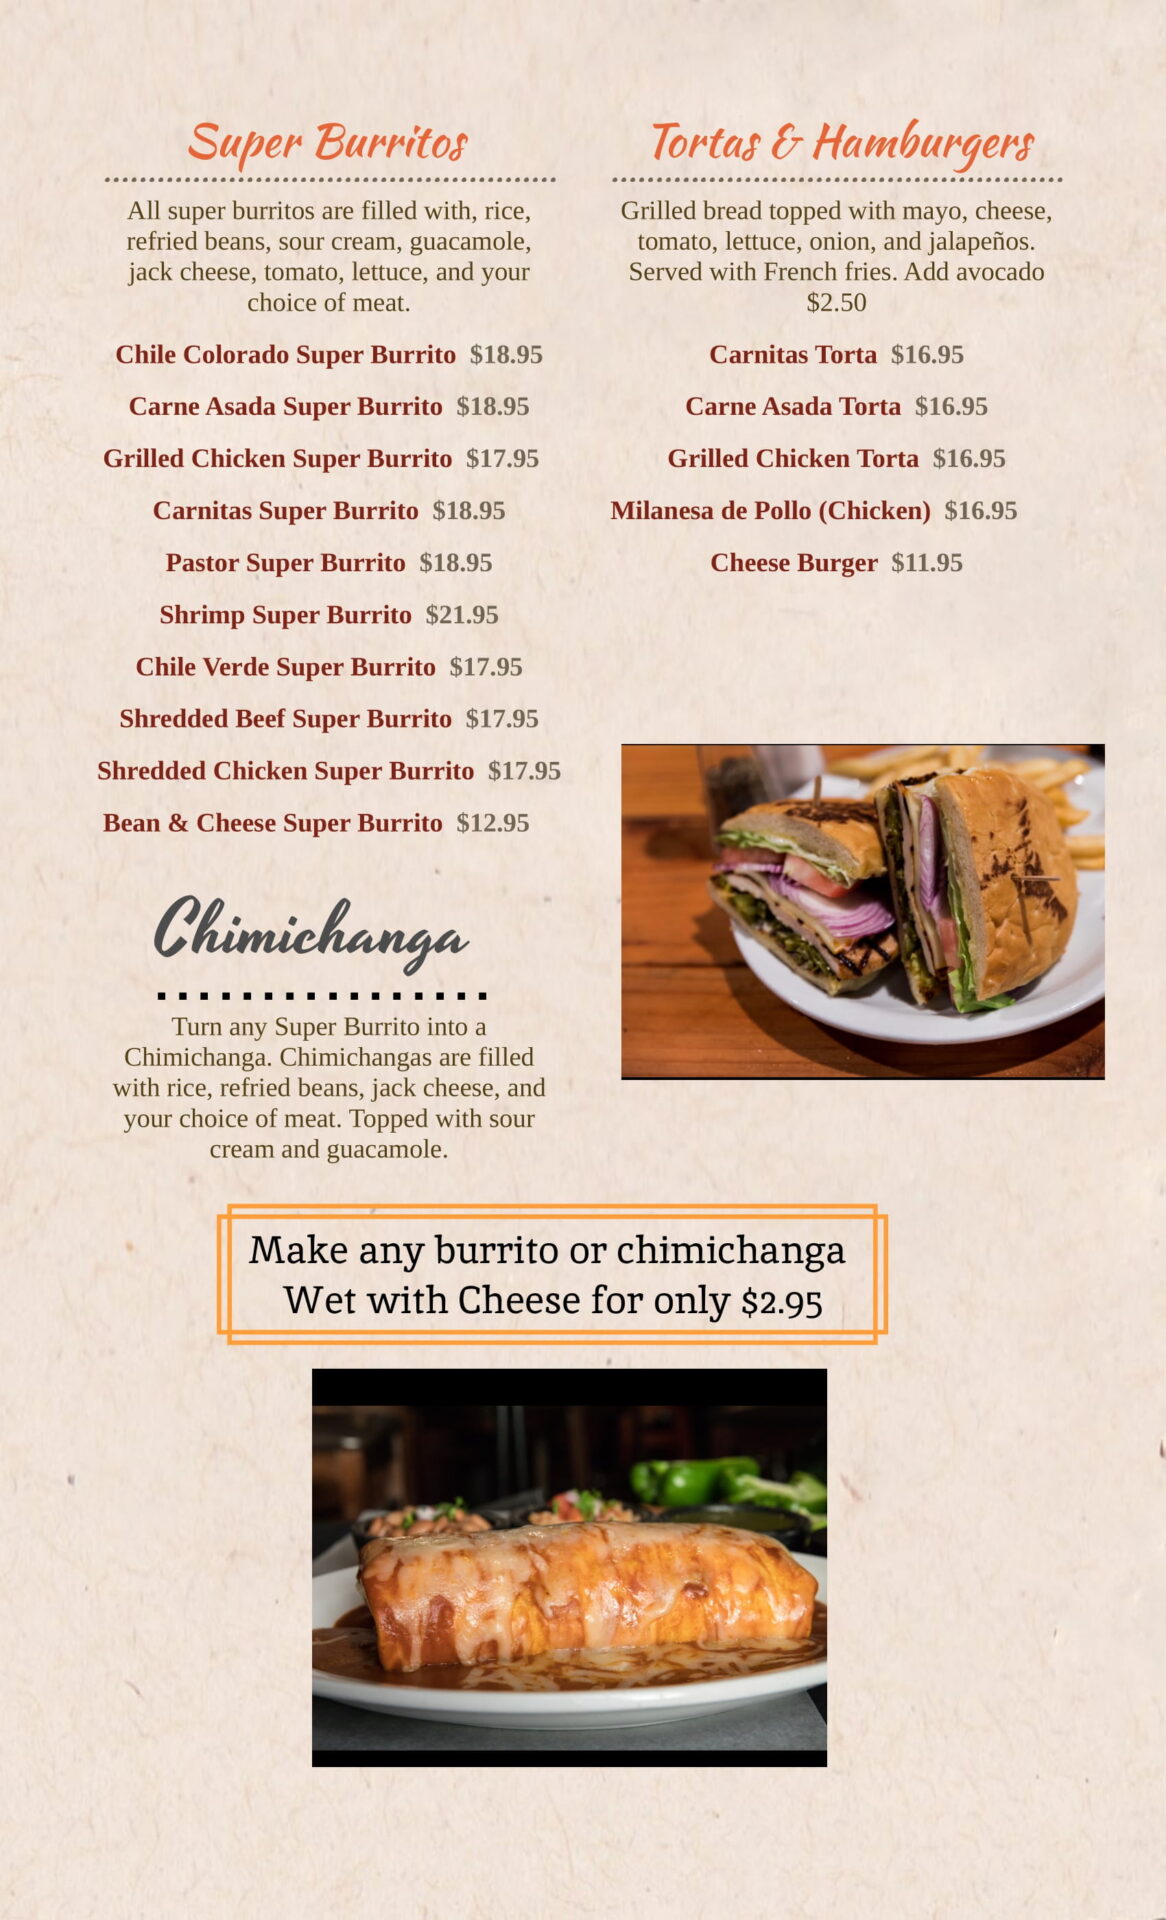 Burrito and chimichanga on display of the website